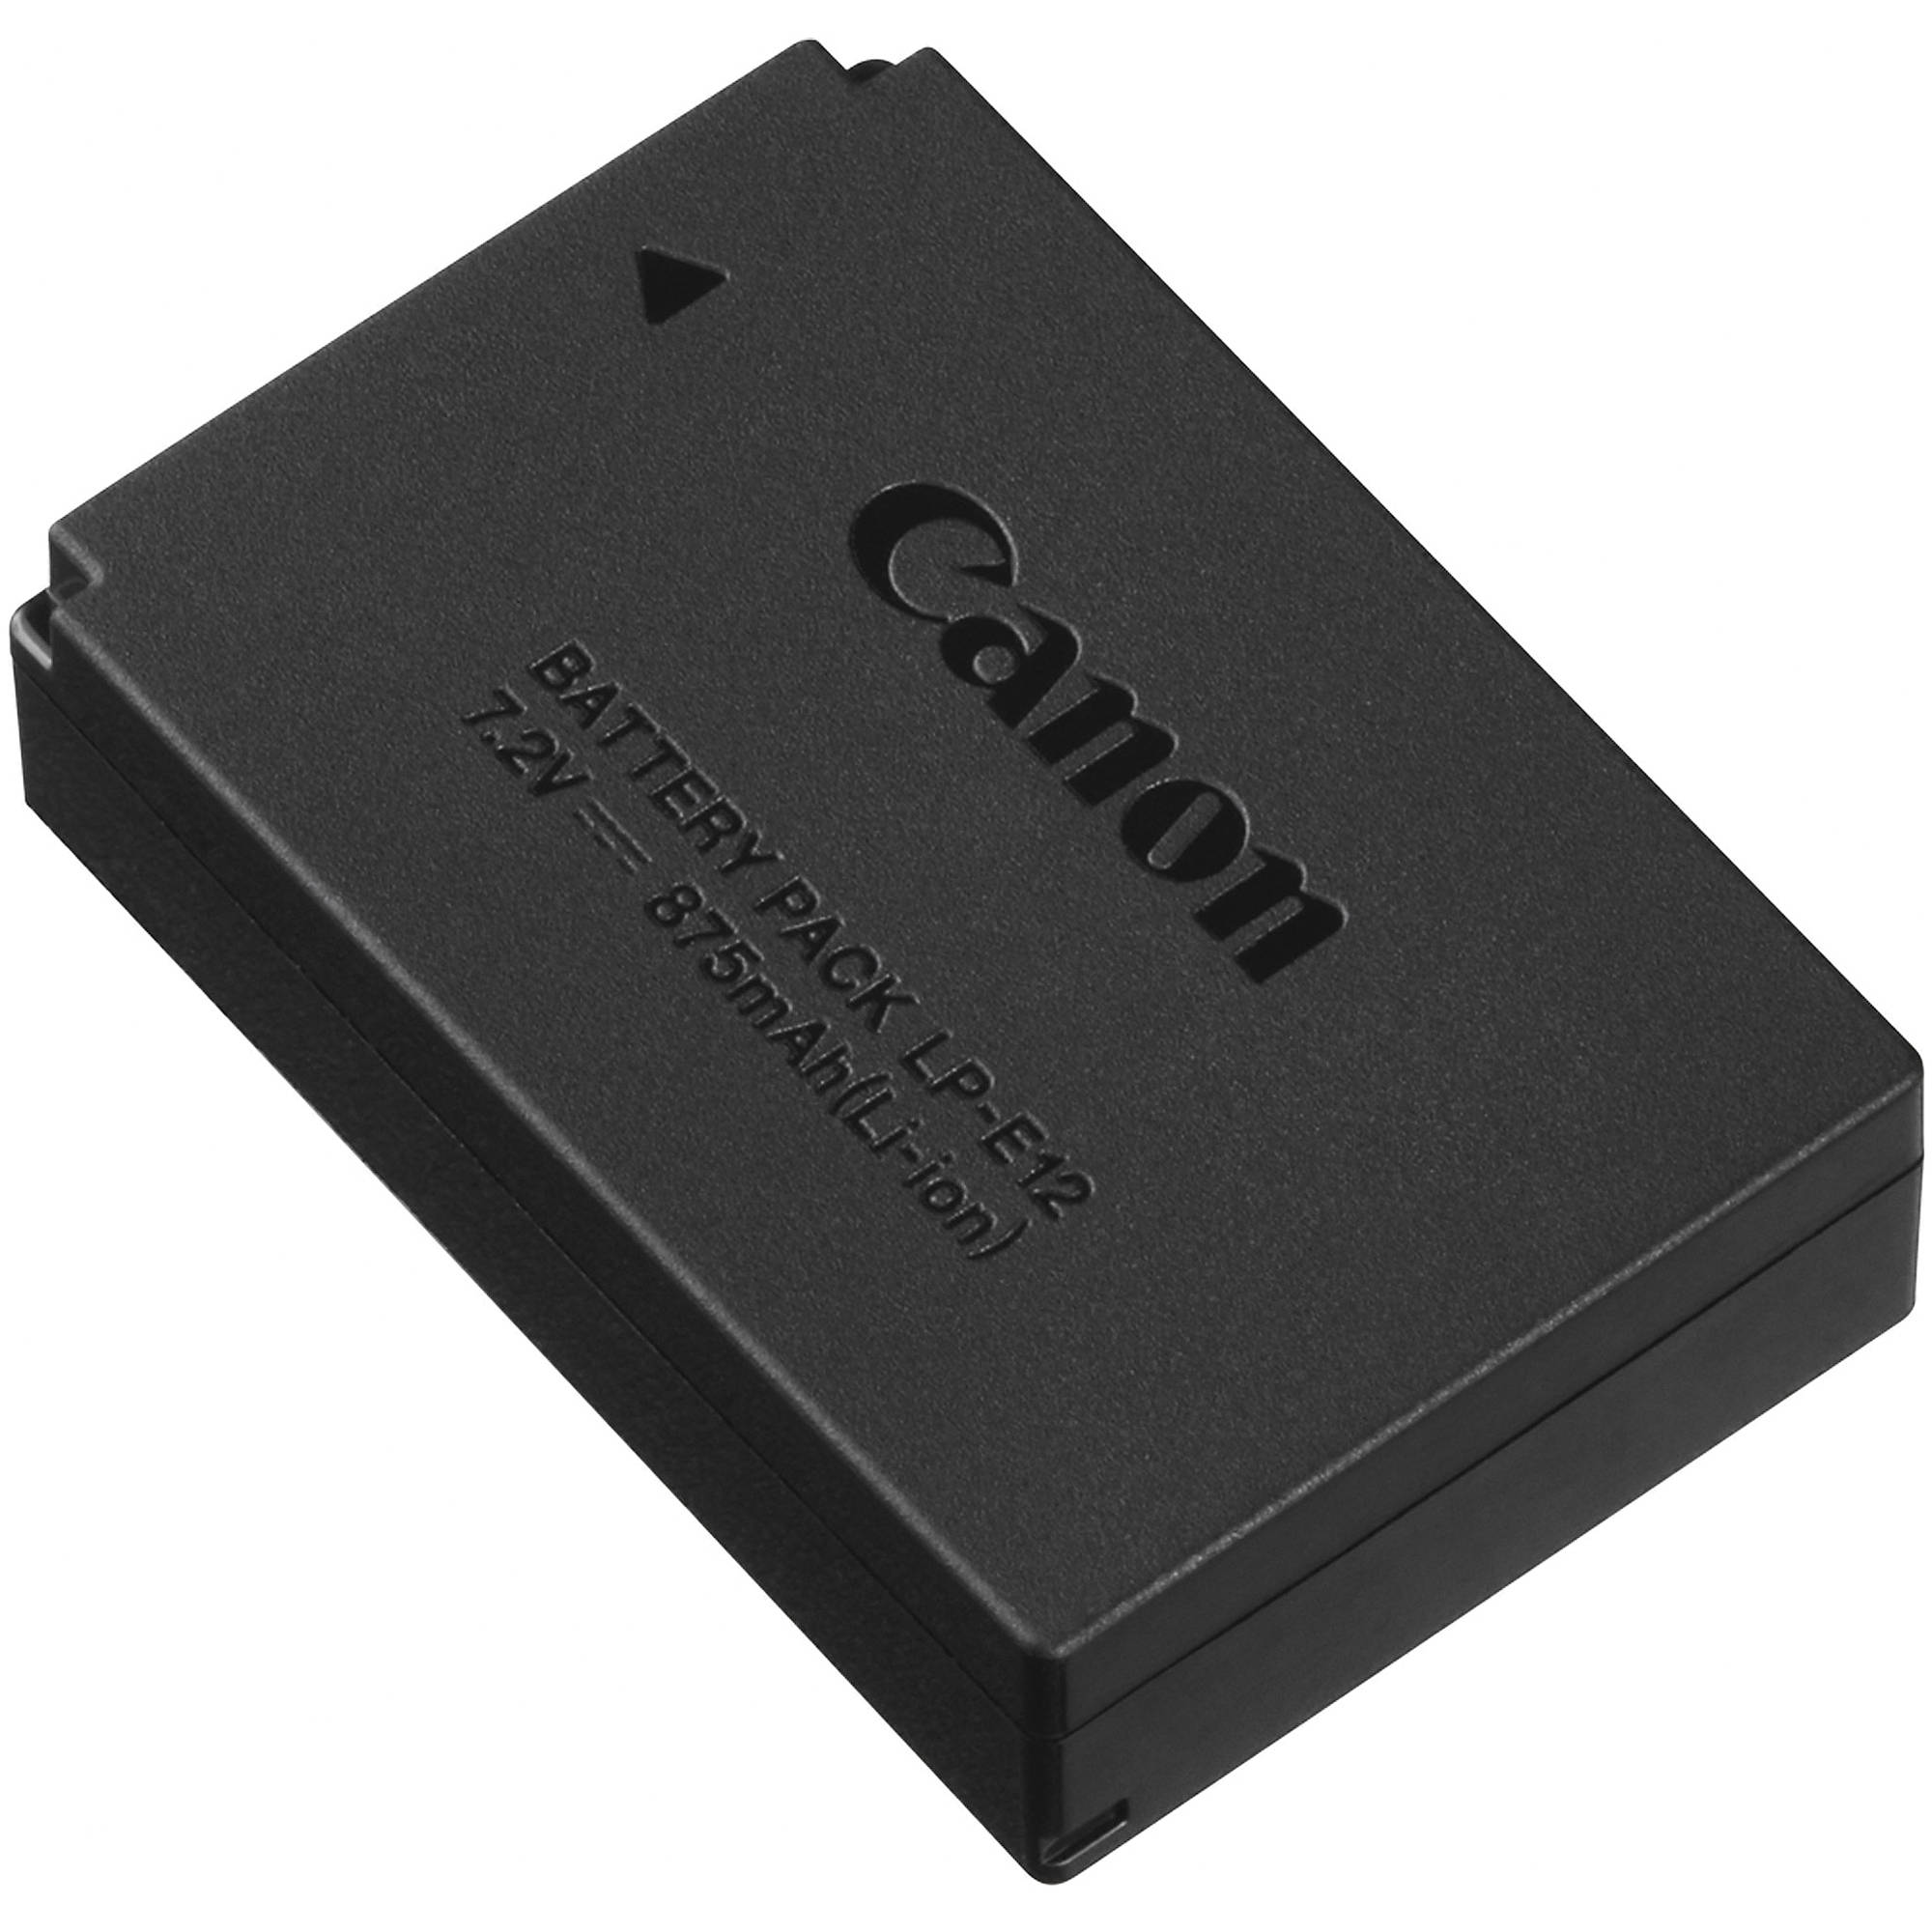 Canon_6760b002_LP_E12_Lithium_Ion_Battery_Pack_883405.jpg